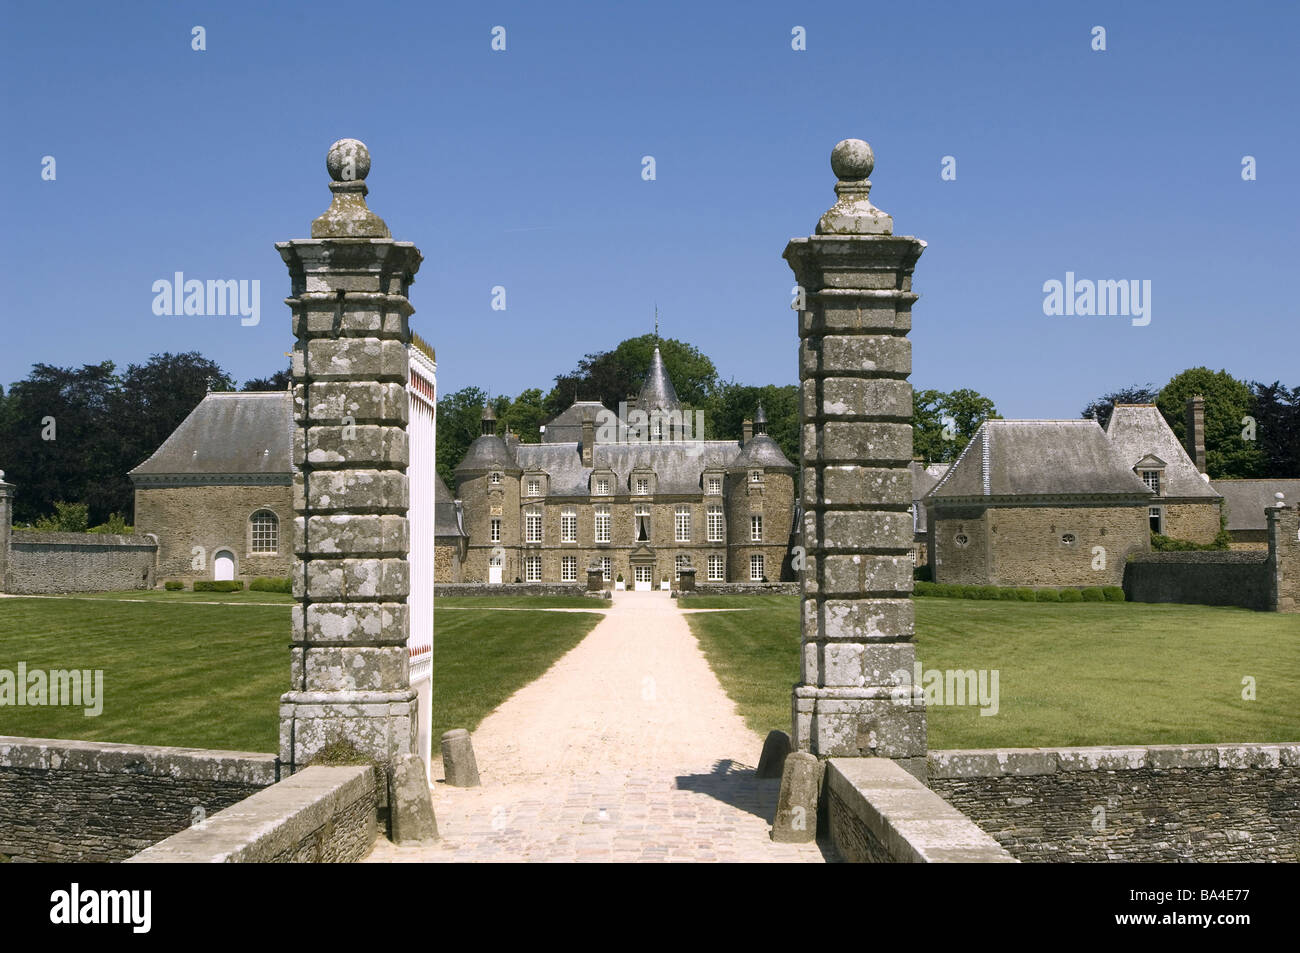 Frankreich-Bretagne Château De La Bourbansais erdet West-Frankreich Ziel aus den Augen Gebäude Bau Architektur Stockfoto